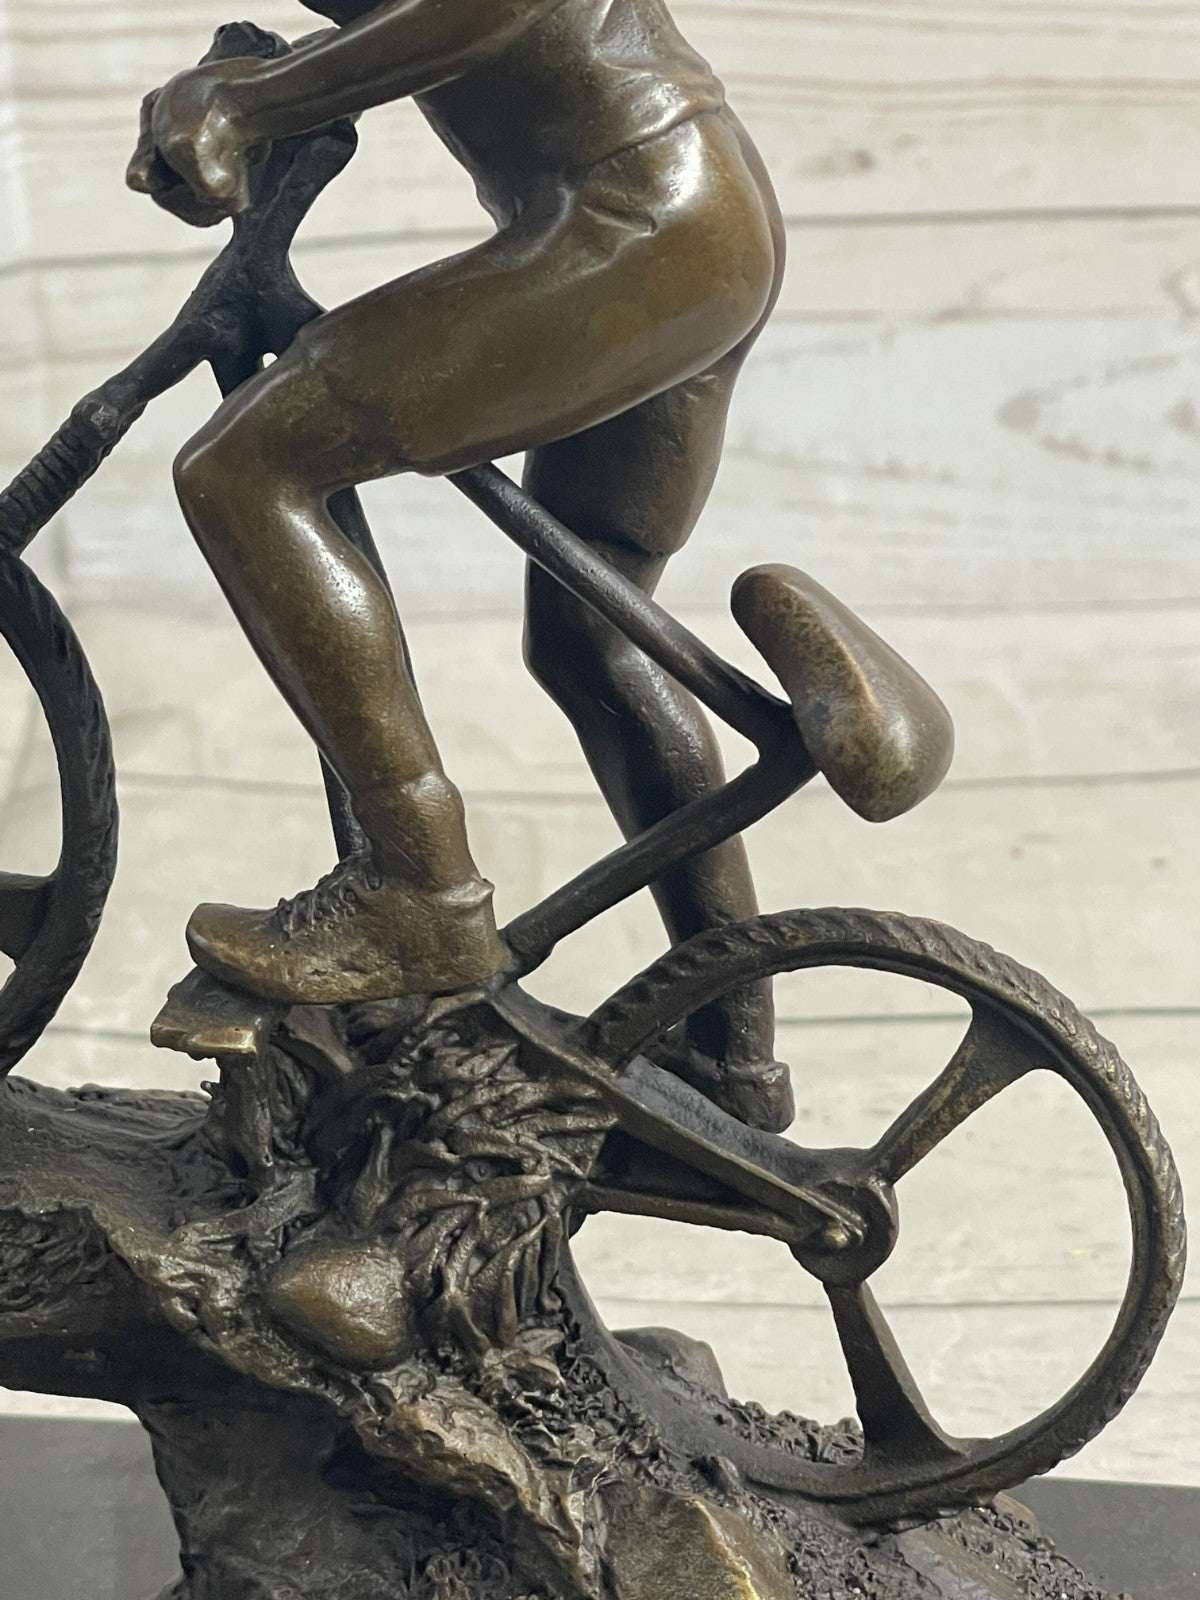 Heavy Solid Wrought Iron Bronze Sculpture Biking Sport Statue Man Bike Bicycle